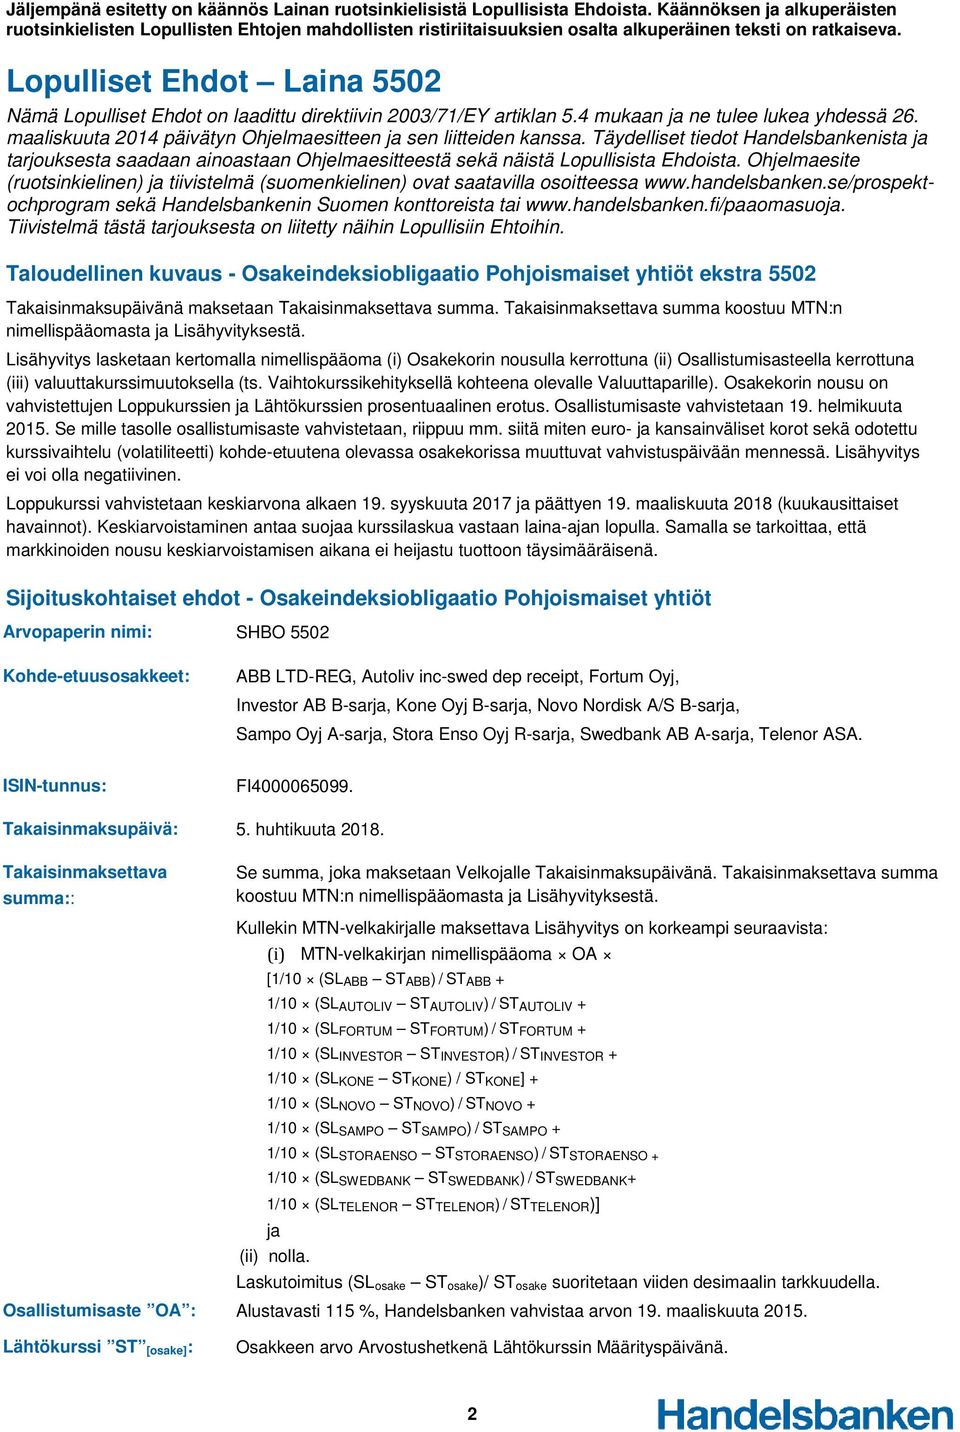 Lopulliset Ehdot Laina 5502 ABB LTD-REG, Autoliv inc-swed dep receipt, Fortum Oyj, Investor AB B-sarja, Kone Oyj B-sarja, Novo Nordisk A/S B-sarja, Sampo Oyj A-sarja, Stora Enso Oyj R-sarja, Swedbank